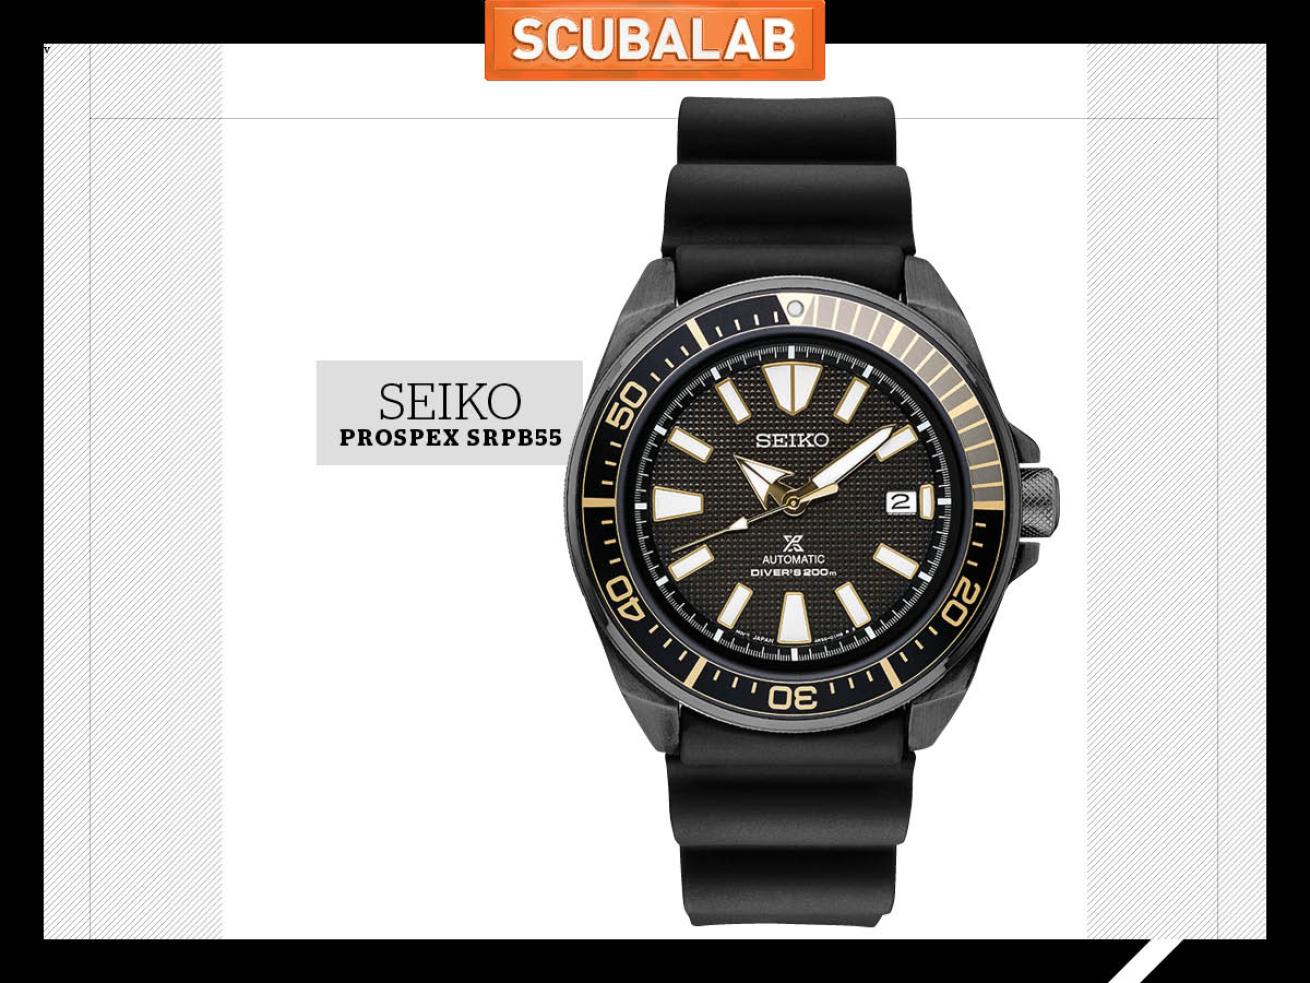 Seiko Prospex SRPB55 dive watch